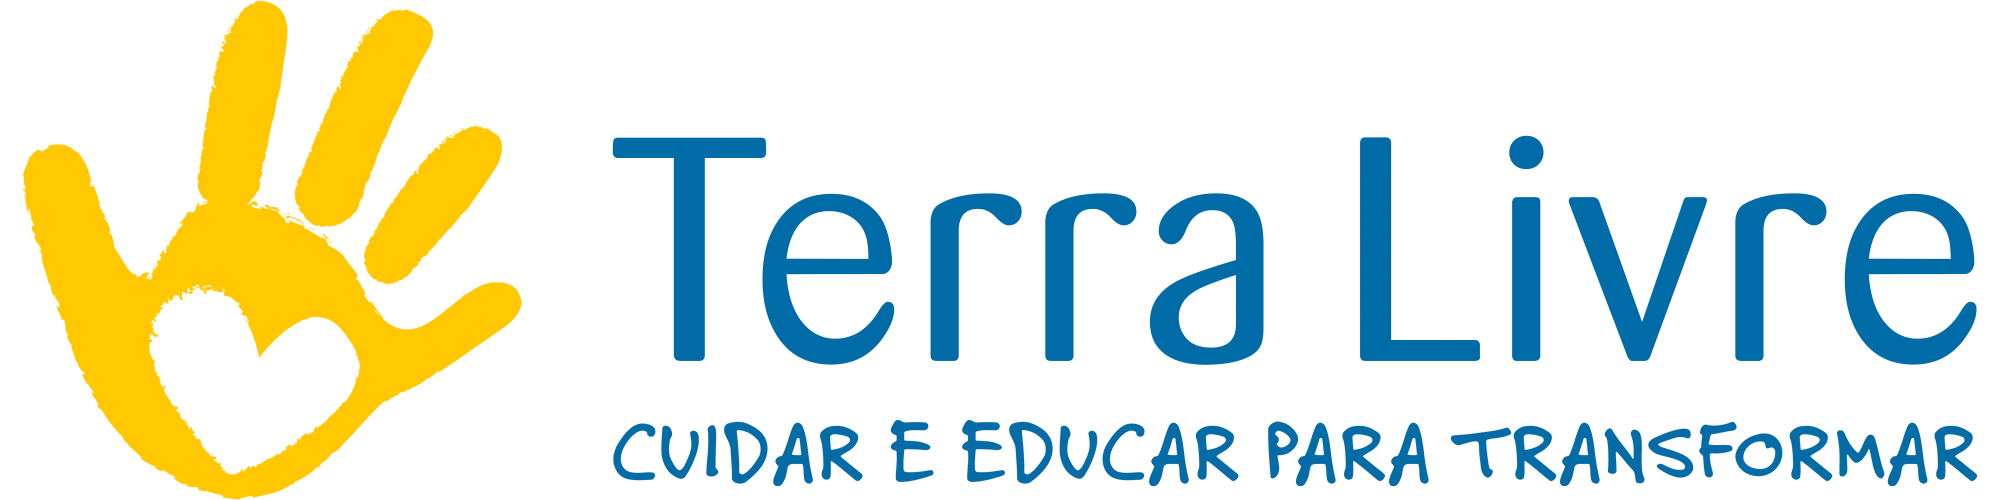 logomarca Terra Livre horizontal colorida com icone, texto e tagline